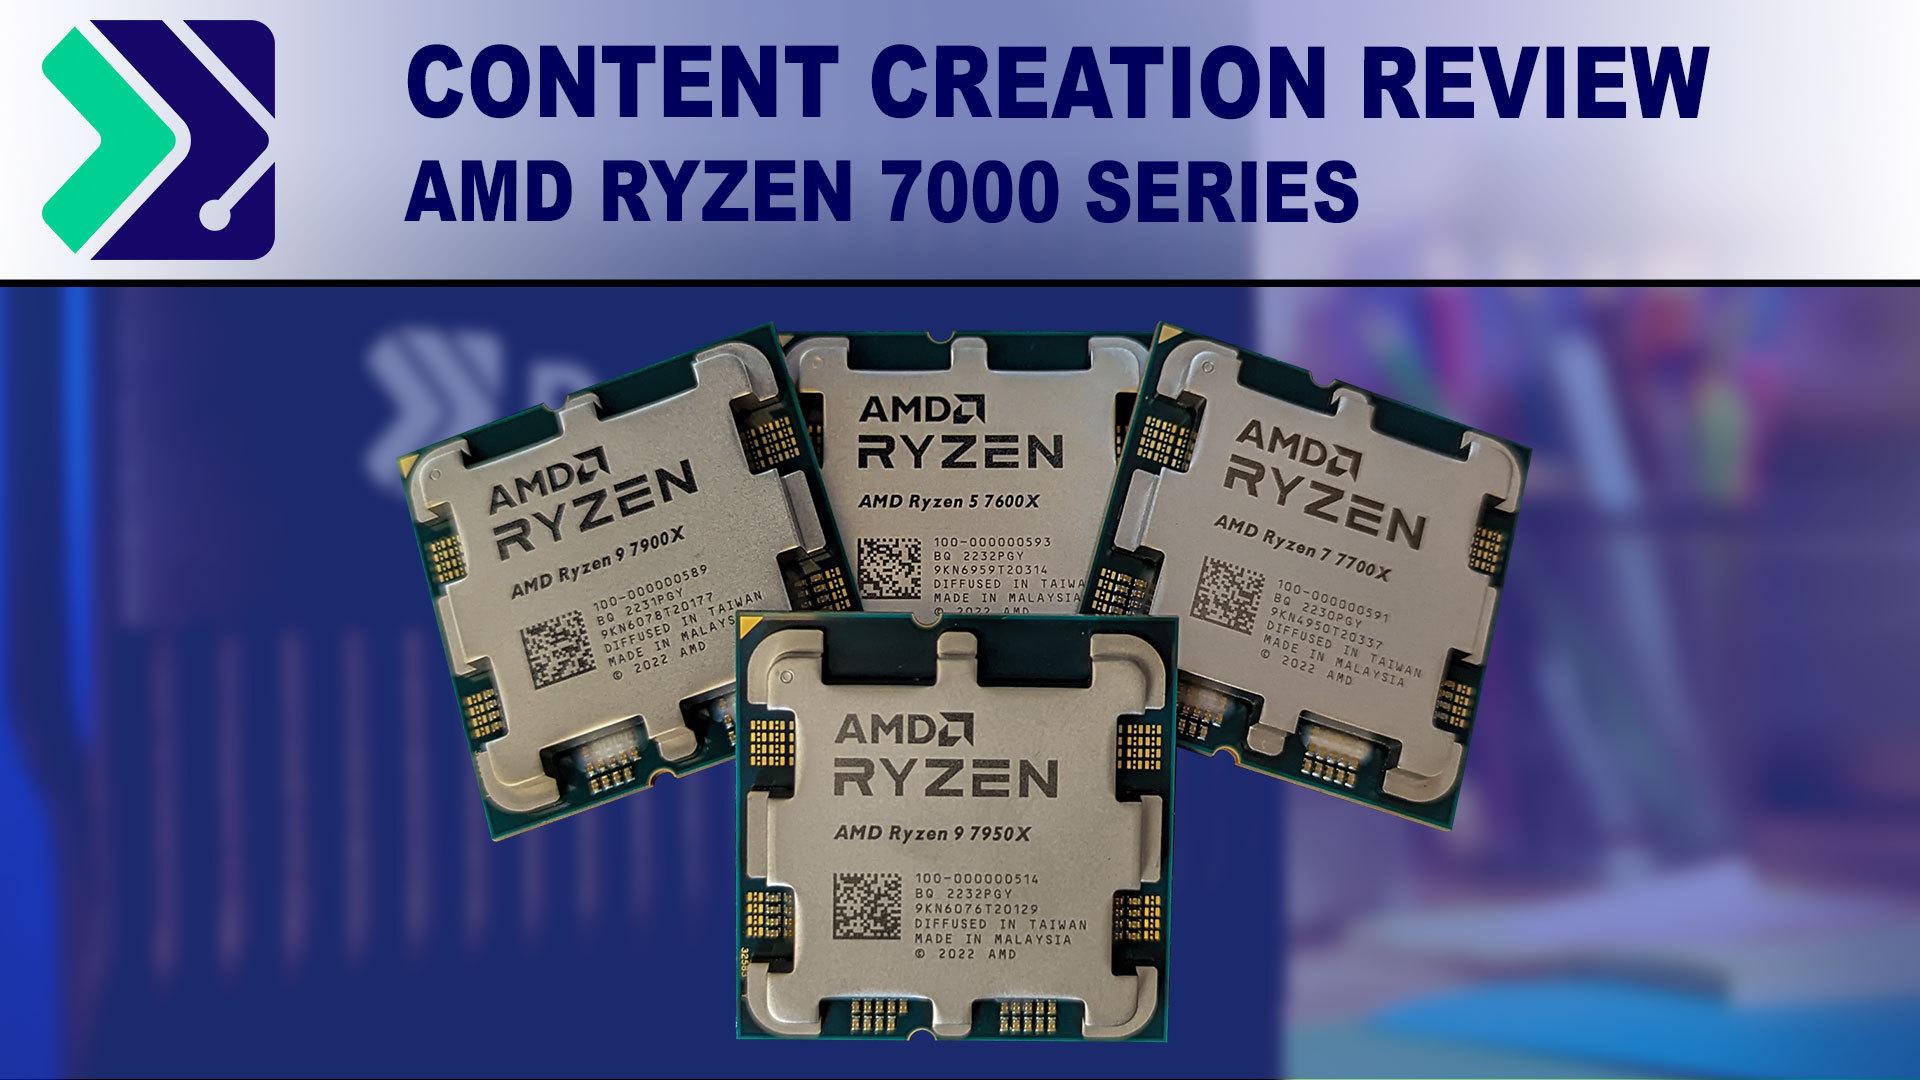 AMD Ryzen 7000 series versus Intel Core 12th Gen for content creation review